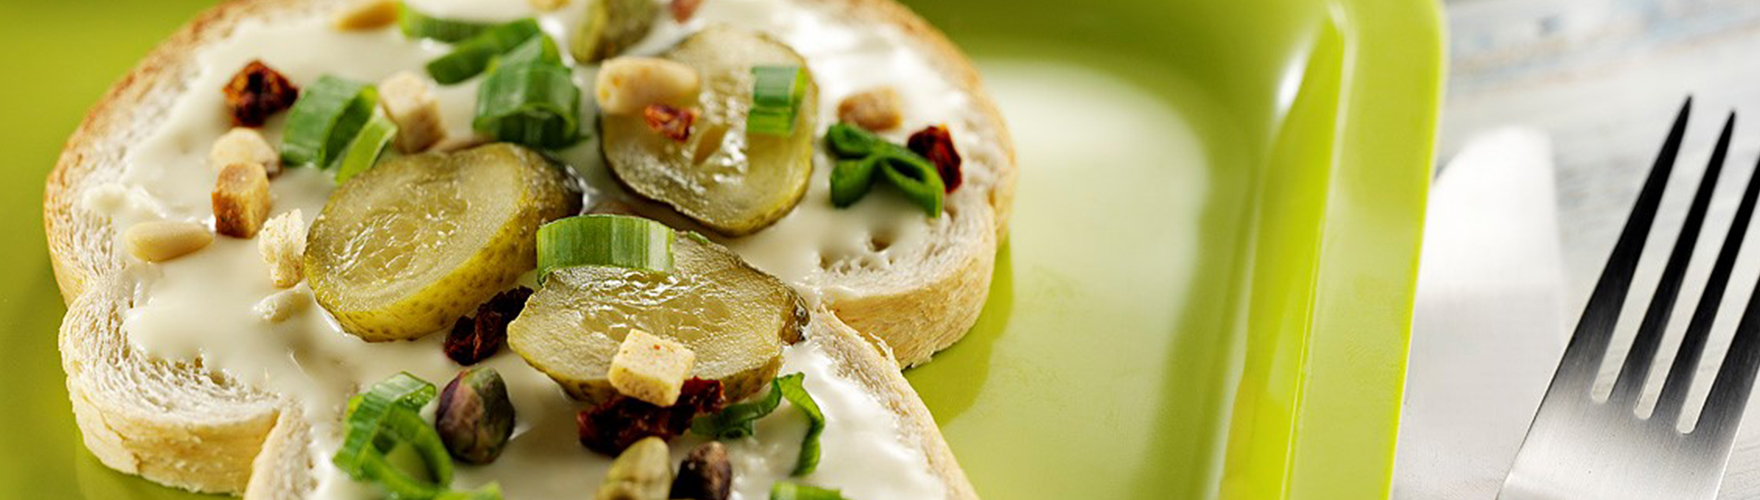 Sandwich with ERU Spreadable Gouda, gherkin and pistachio nuts